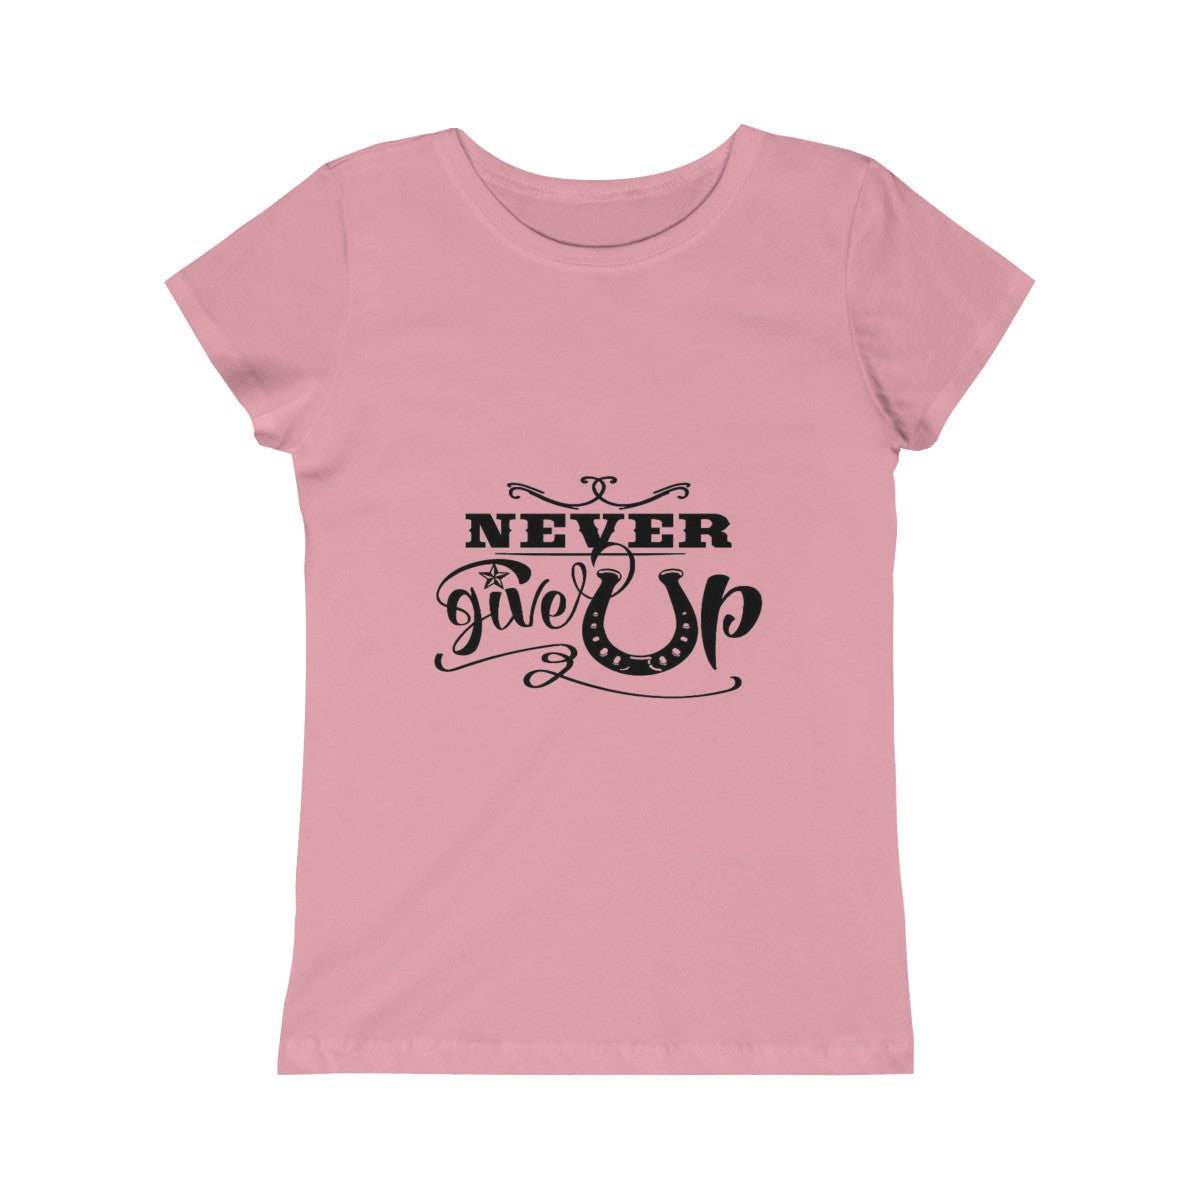 Never Give Up - Girls Princess Tee - Black Print